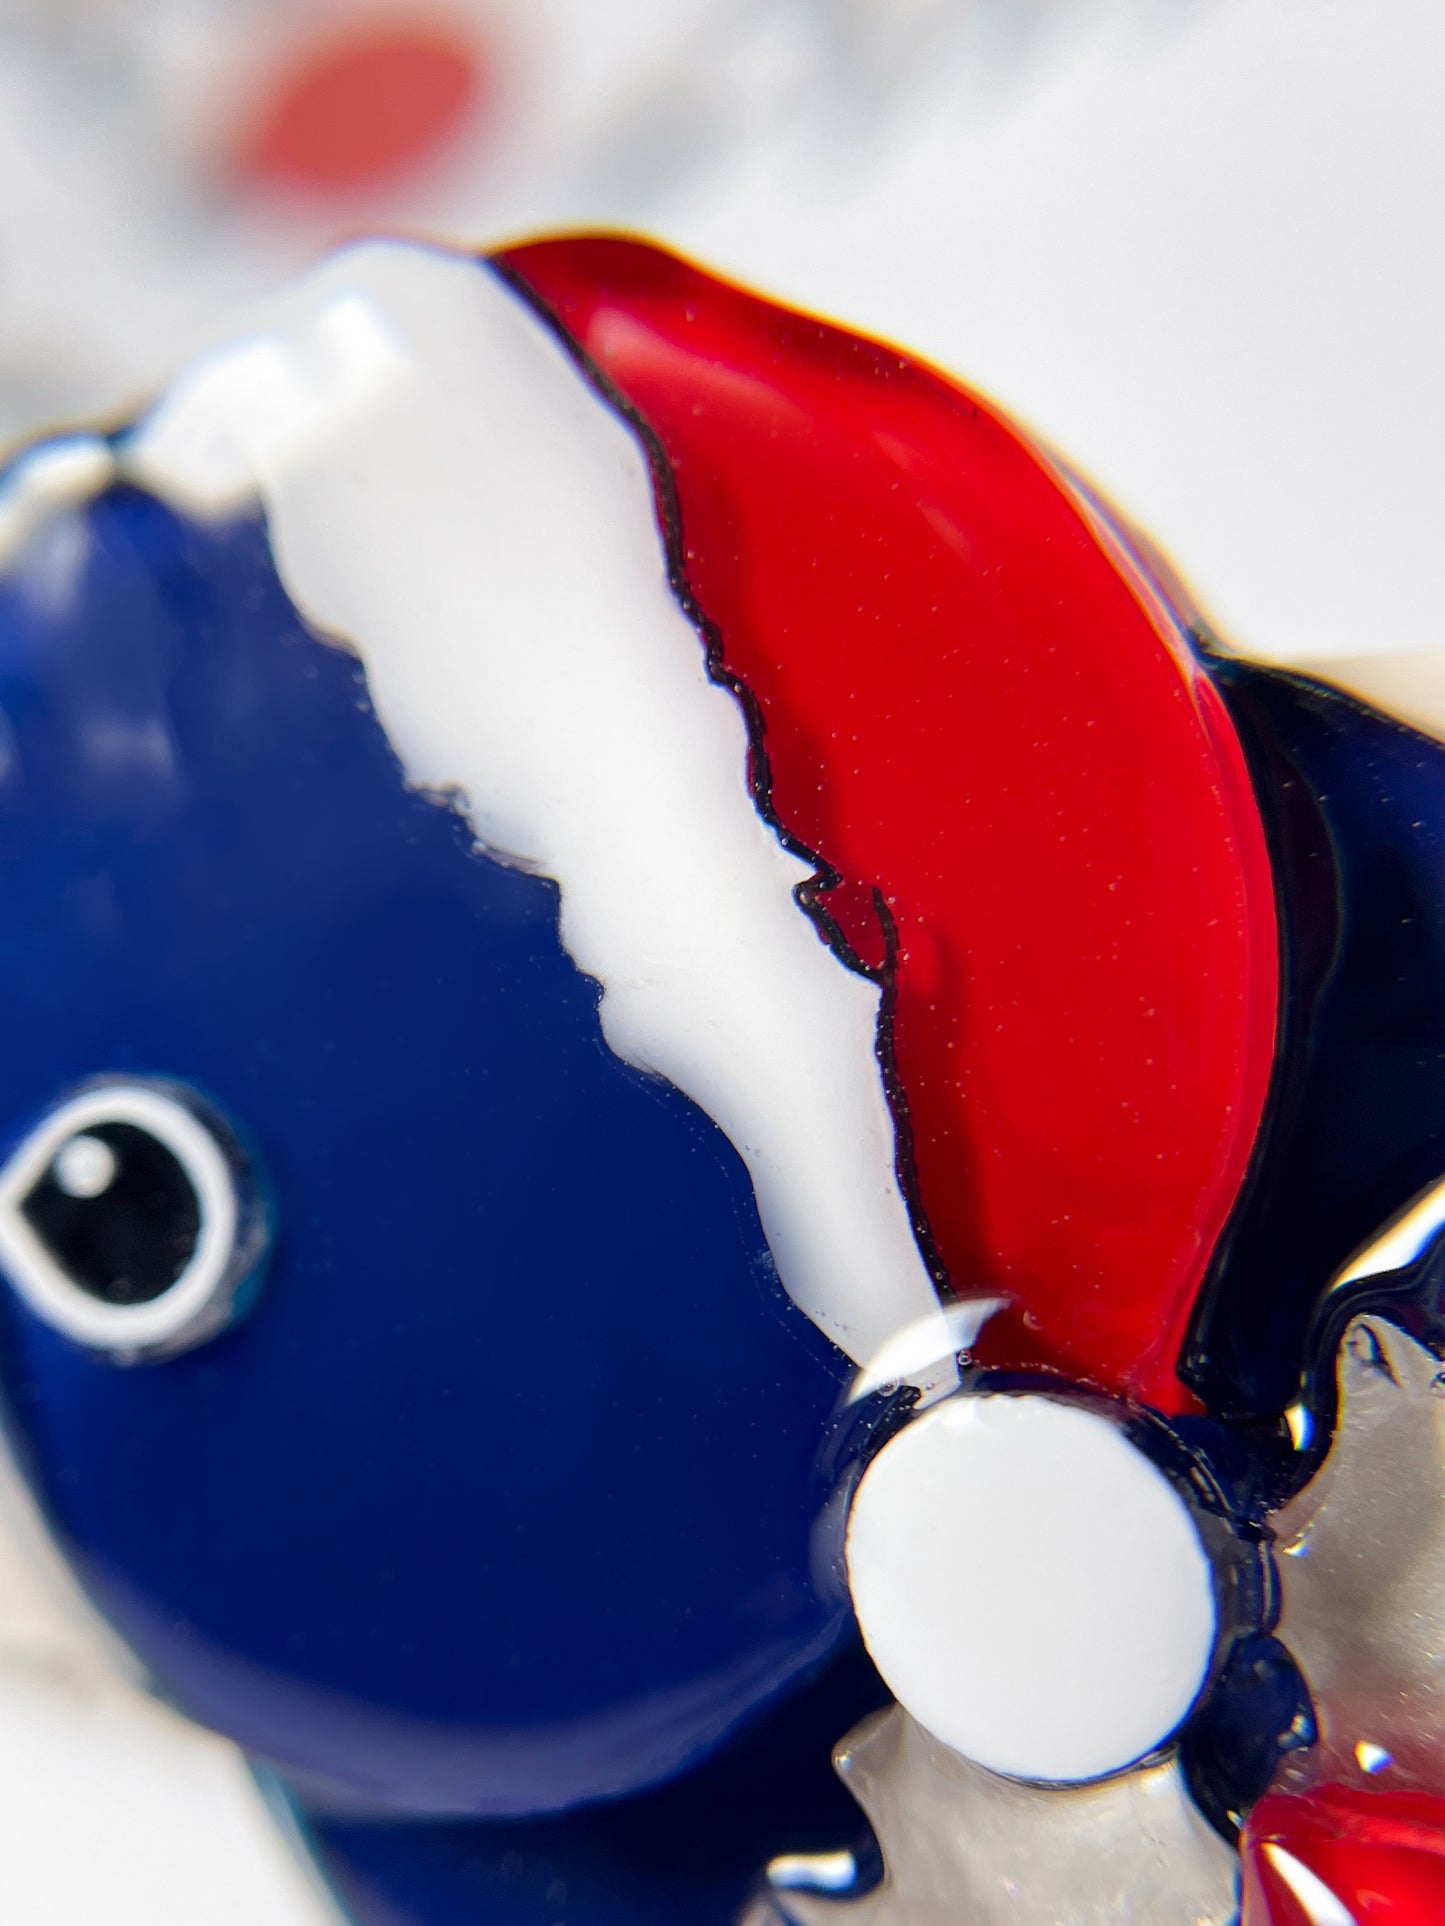 Christmas version of Japanese white-eye bird brooch (Navy blue)